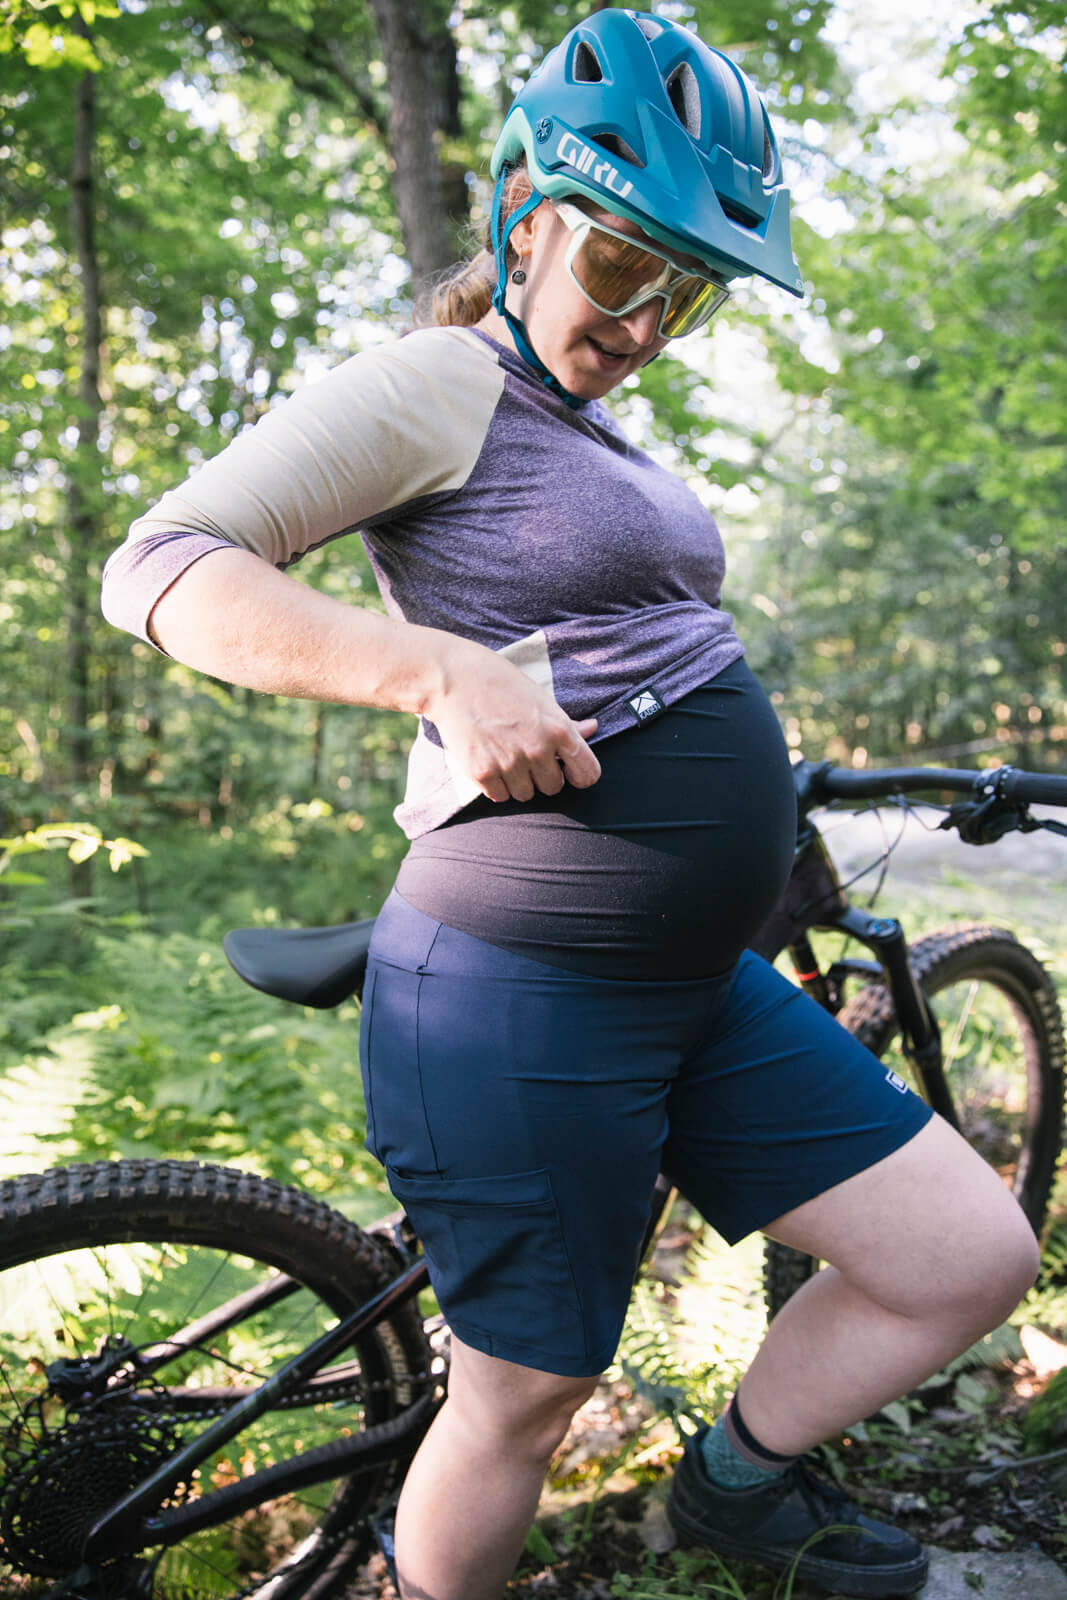 Ryka Women's Maternity Biker Shorts